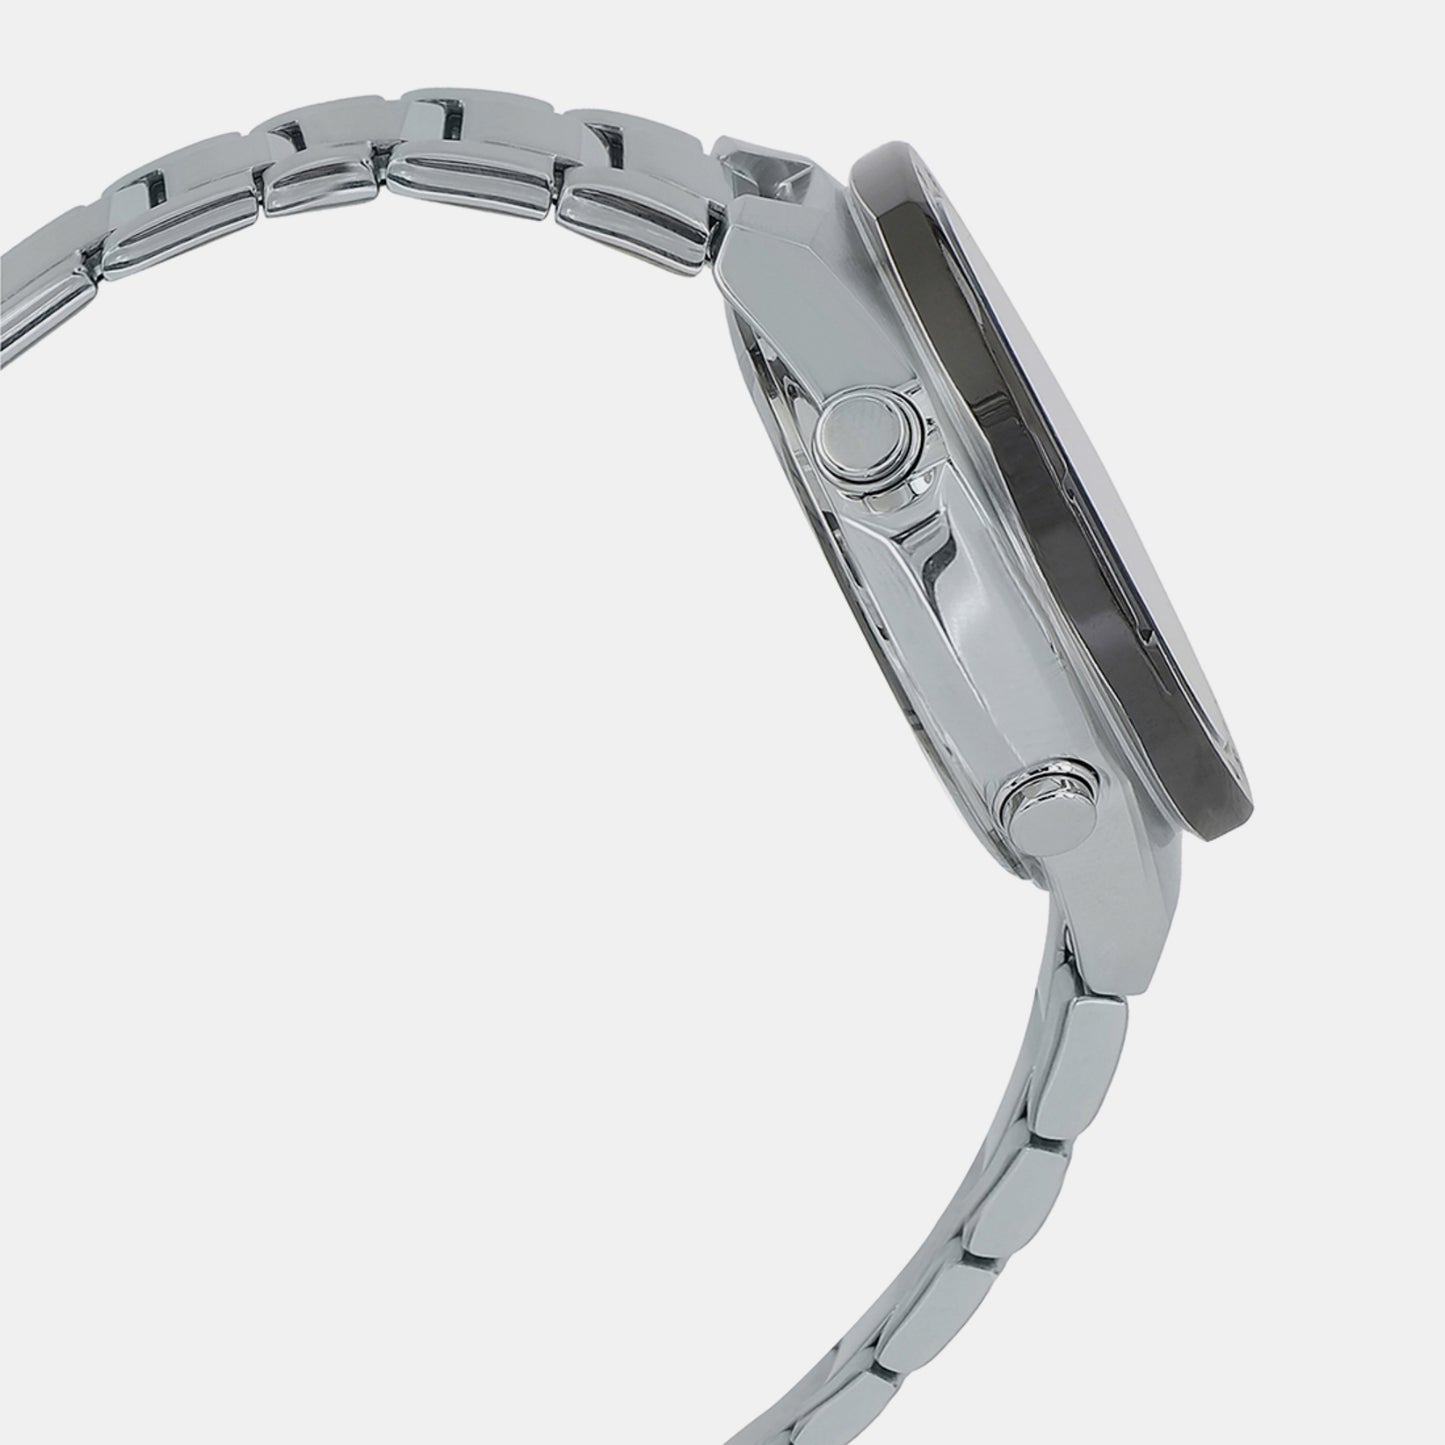 Male Black Analog-Digital Stainless Steel Watch EX554